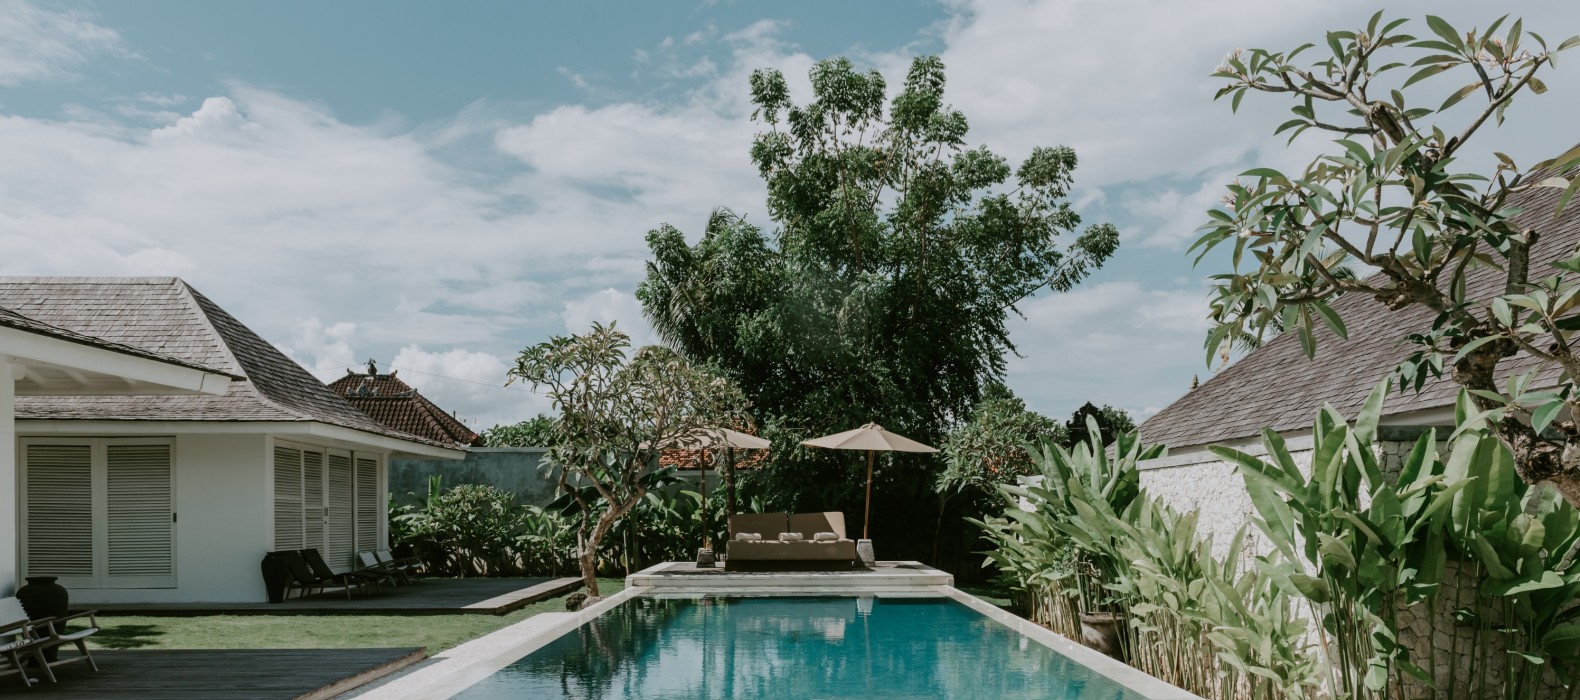 Exterior pool of Villa Fortuna in Bali